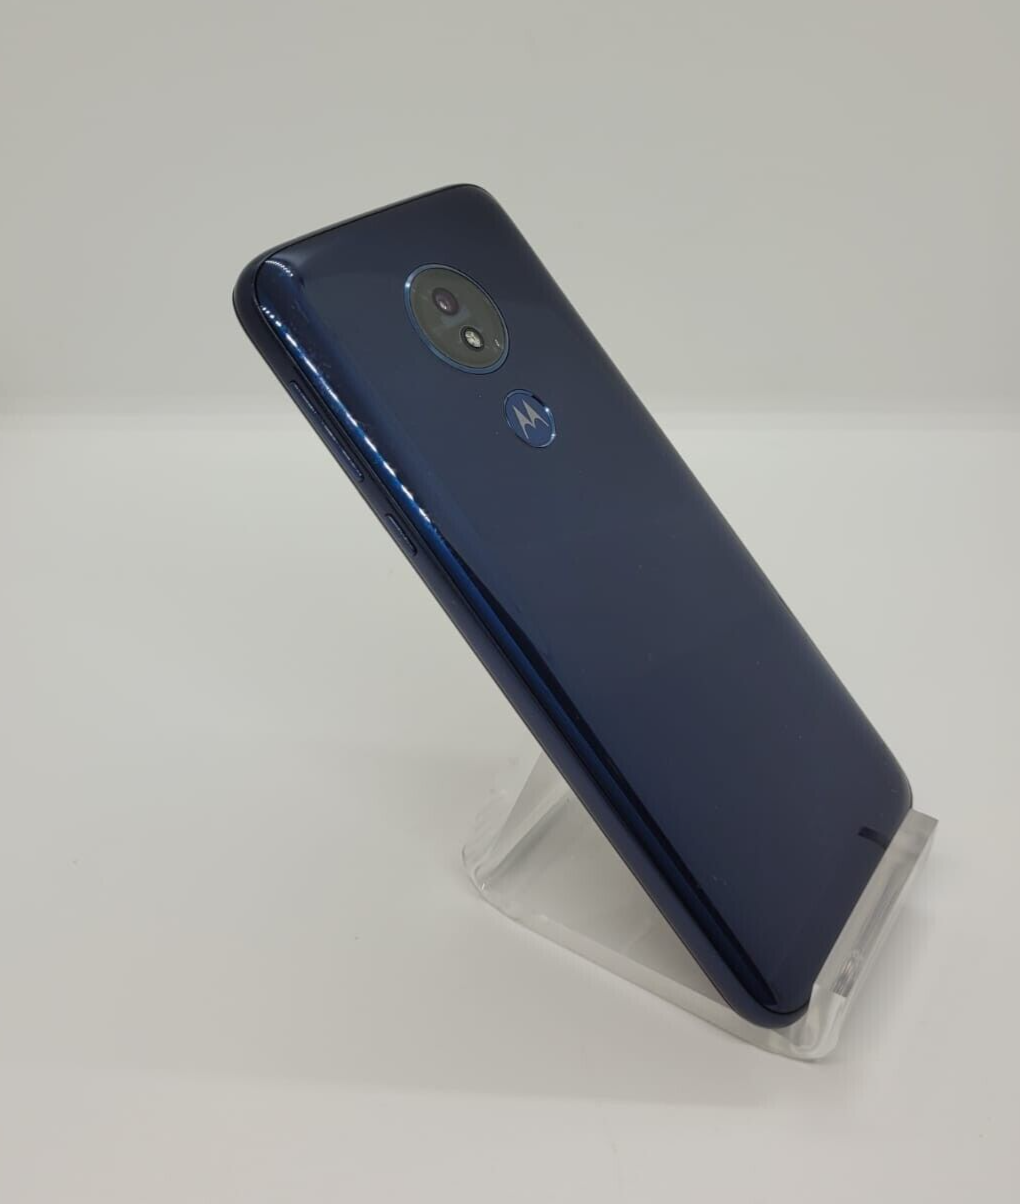 Moto G7 Power 32GB Unlocked Android 4G LTE Smartphone Blue XT1955-5